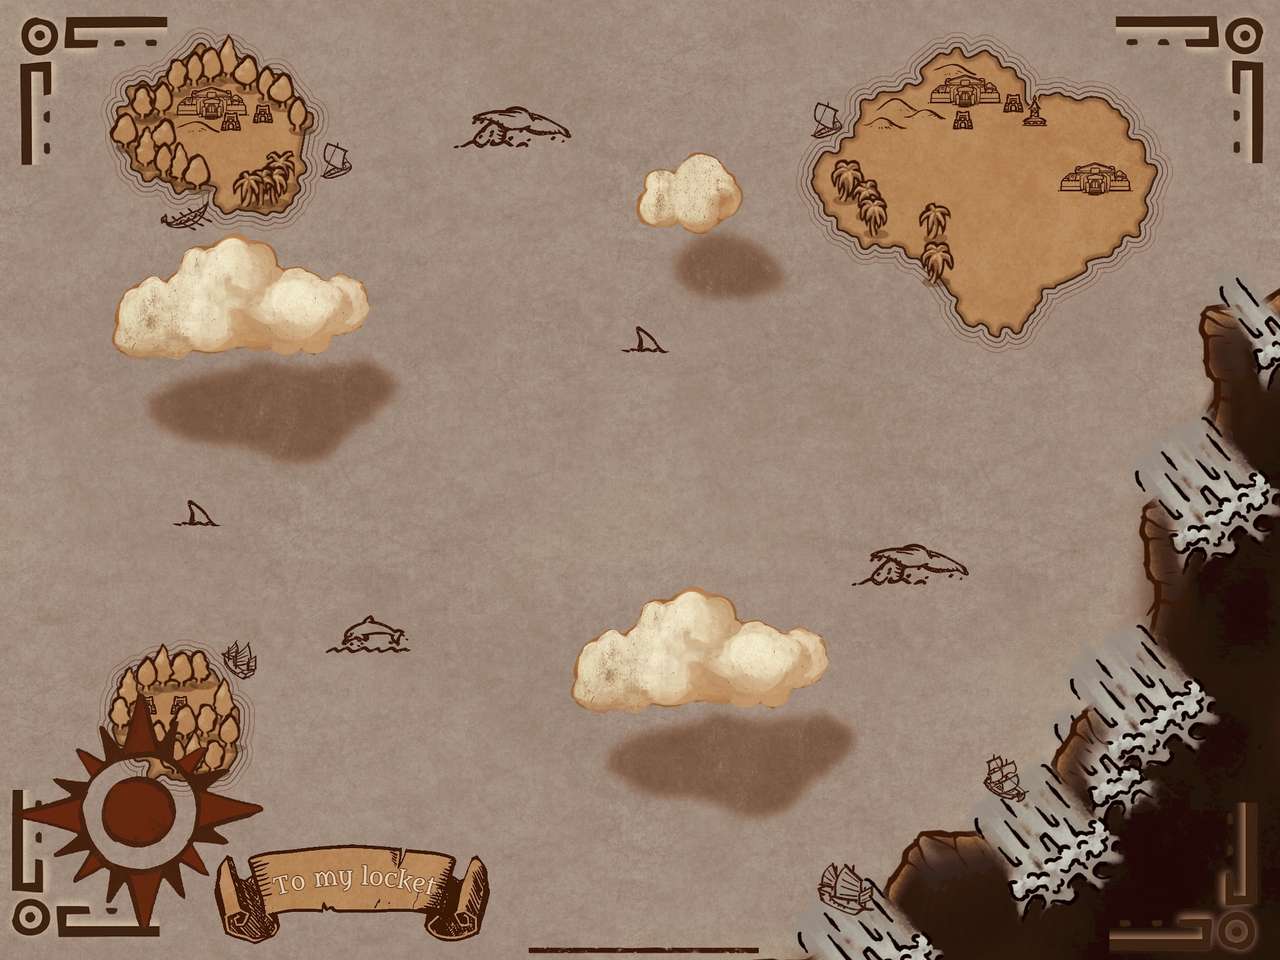 Soren's Strange Map puzzle online from photo